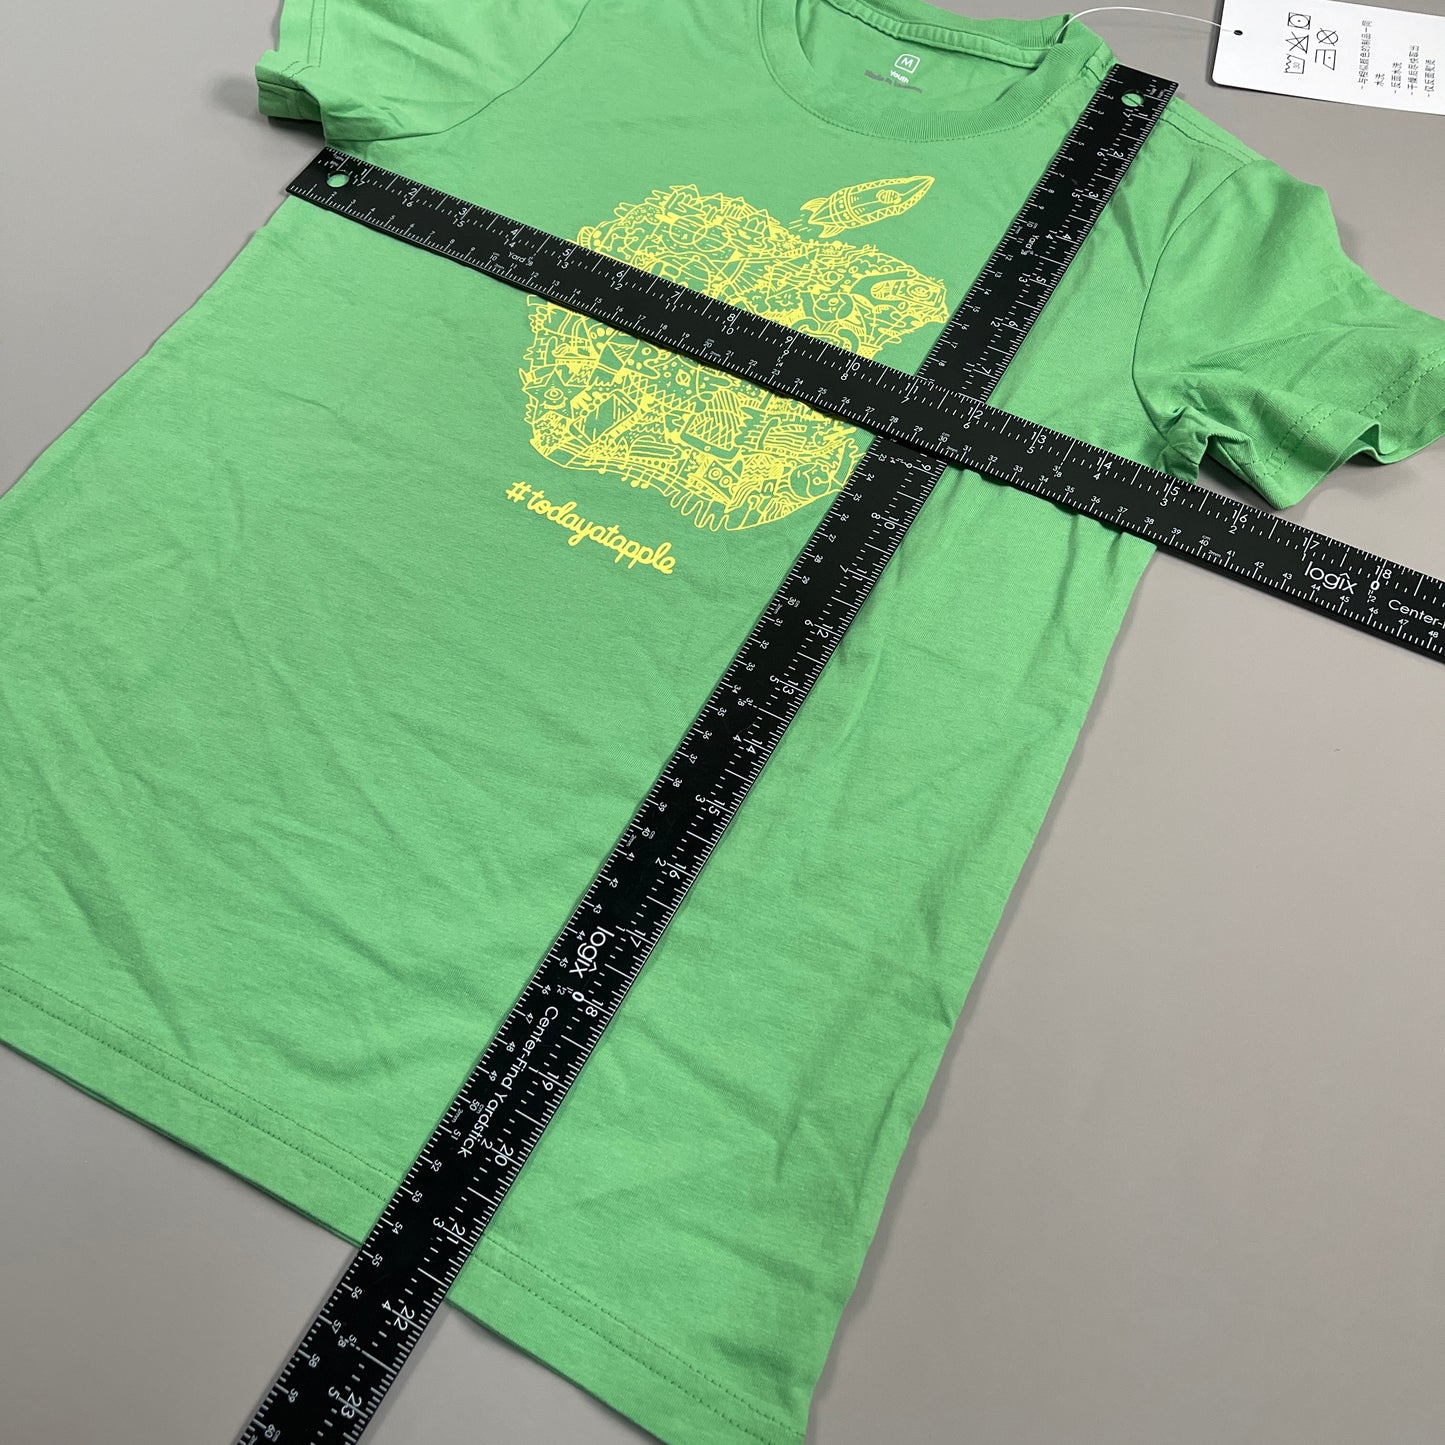 APPLE #todayatapple Camp Tee T-Shirt Kid’s Sz M (YM) Green Y806501-WW (New)